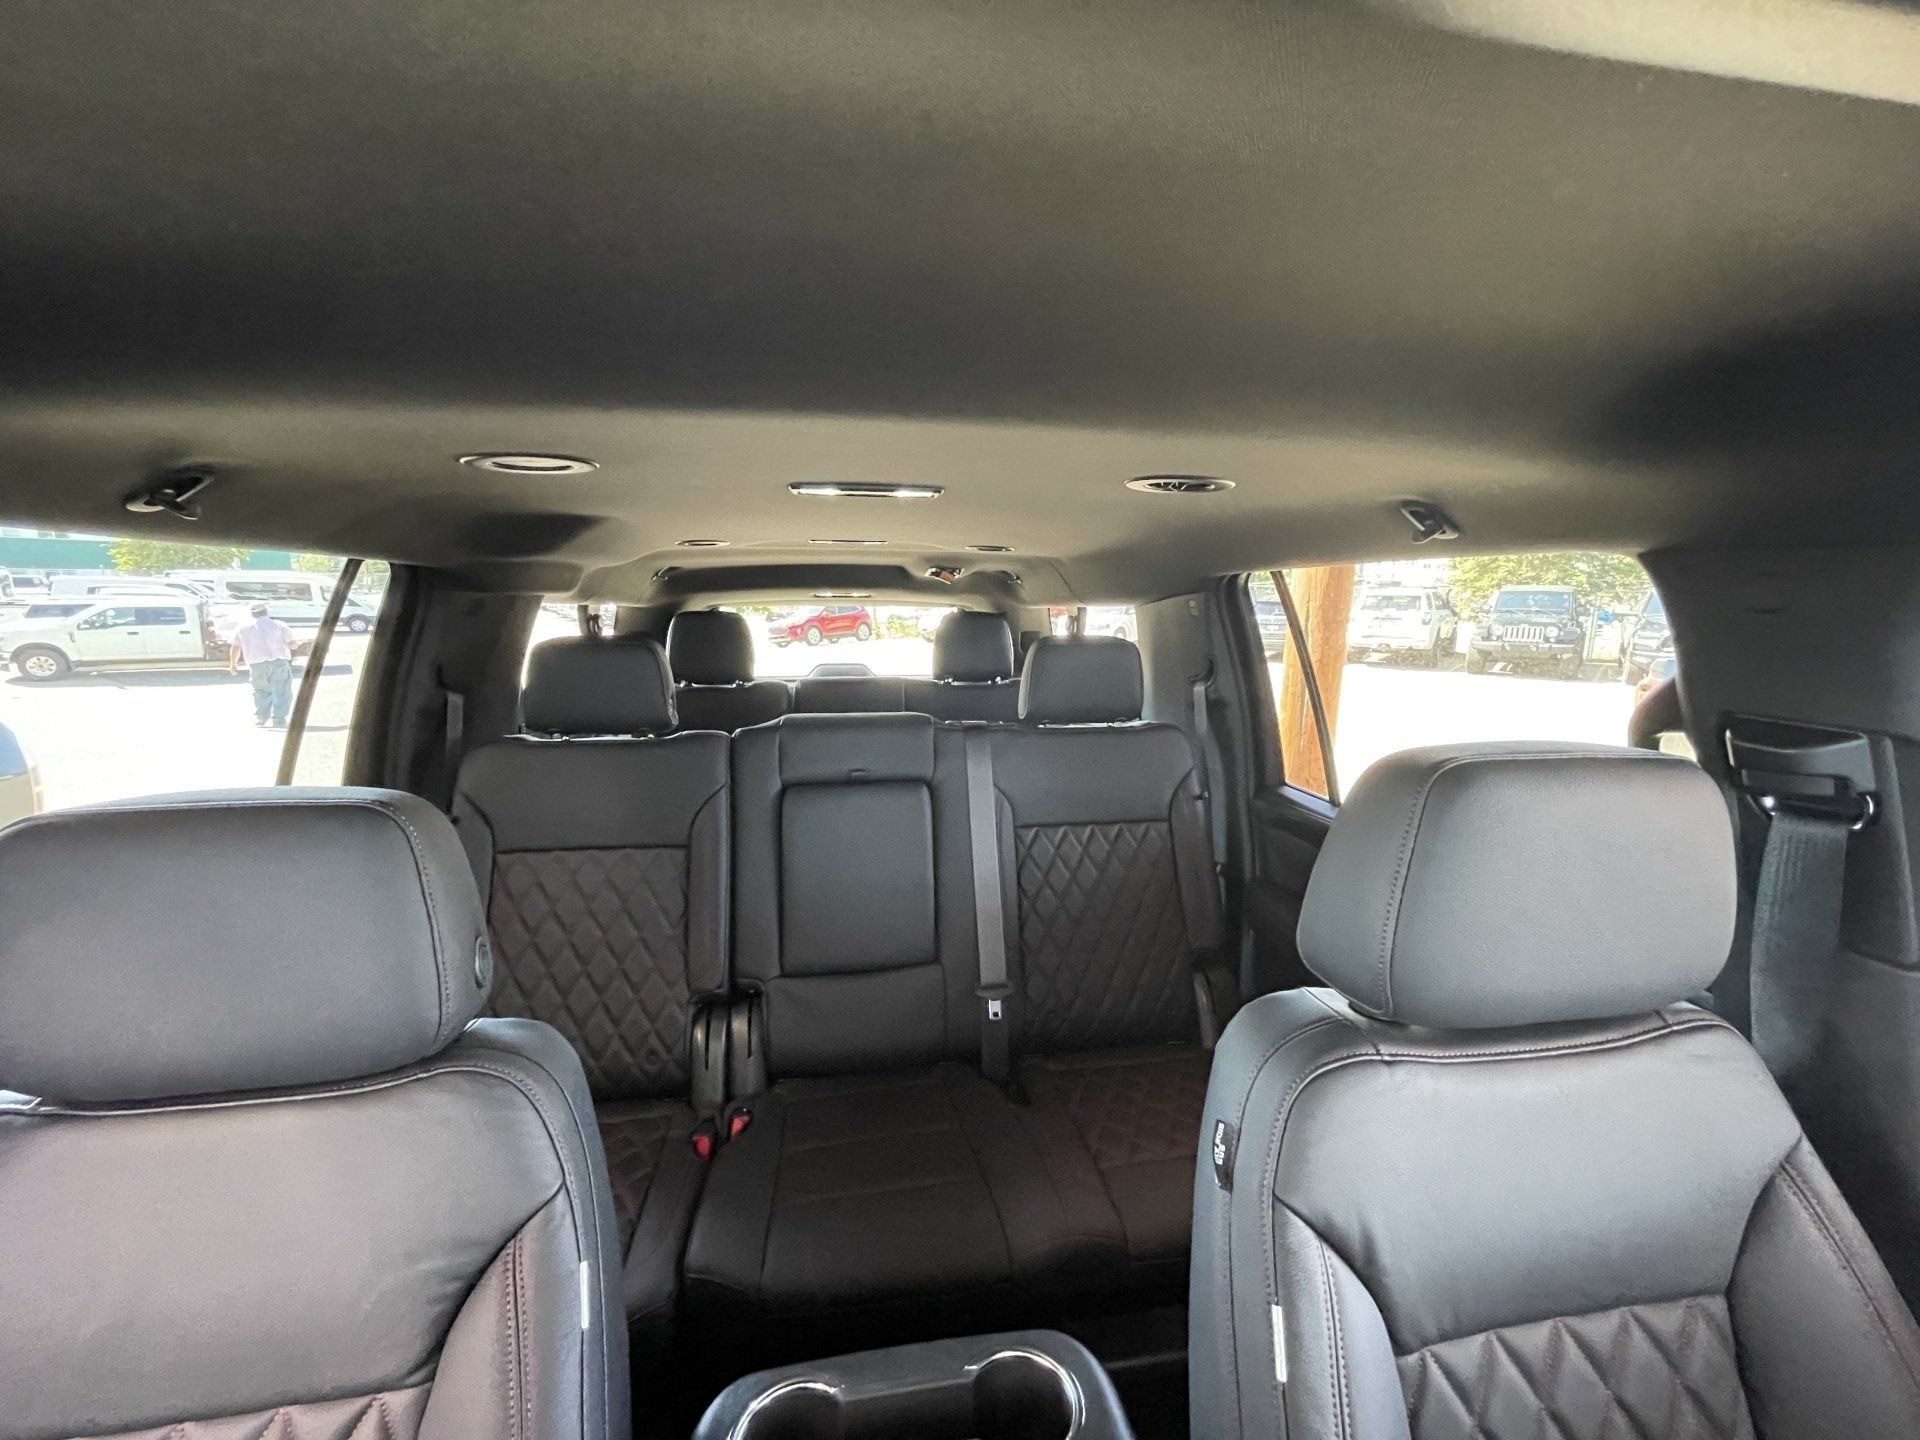 black Limo To Go GMC Yukon SLE luxury SUV premiere quality leather seating interior